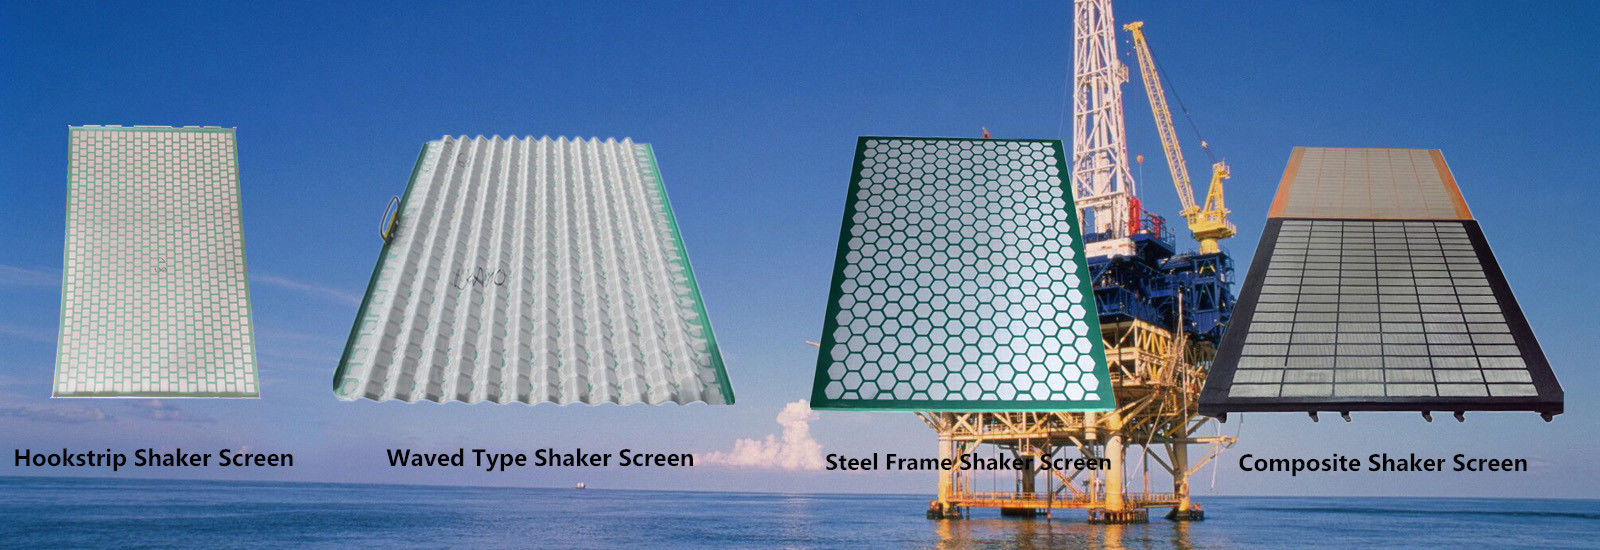 Shale Shaker Screen